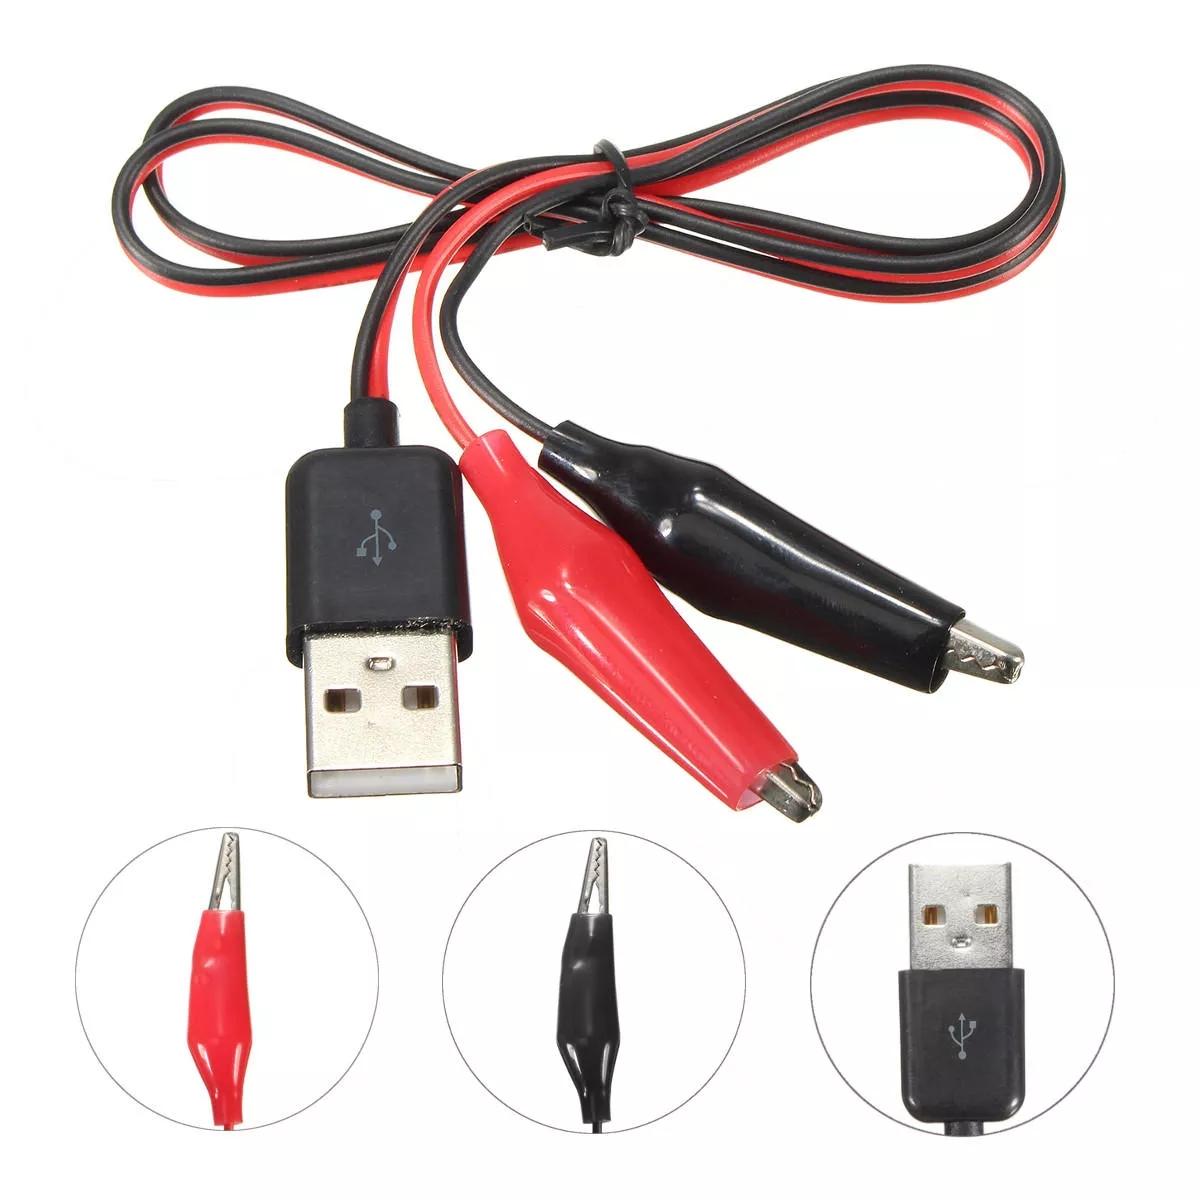 5 Stks DANIU 60 CM Krokodil Test Clips Klem naar USB Mannelijke Connector Power Adapter Kabel Draad